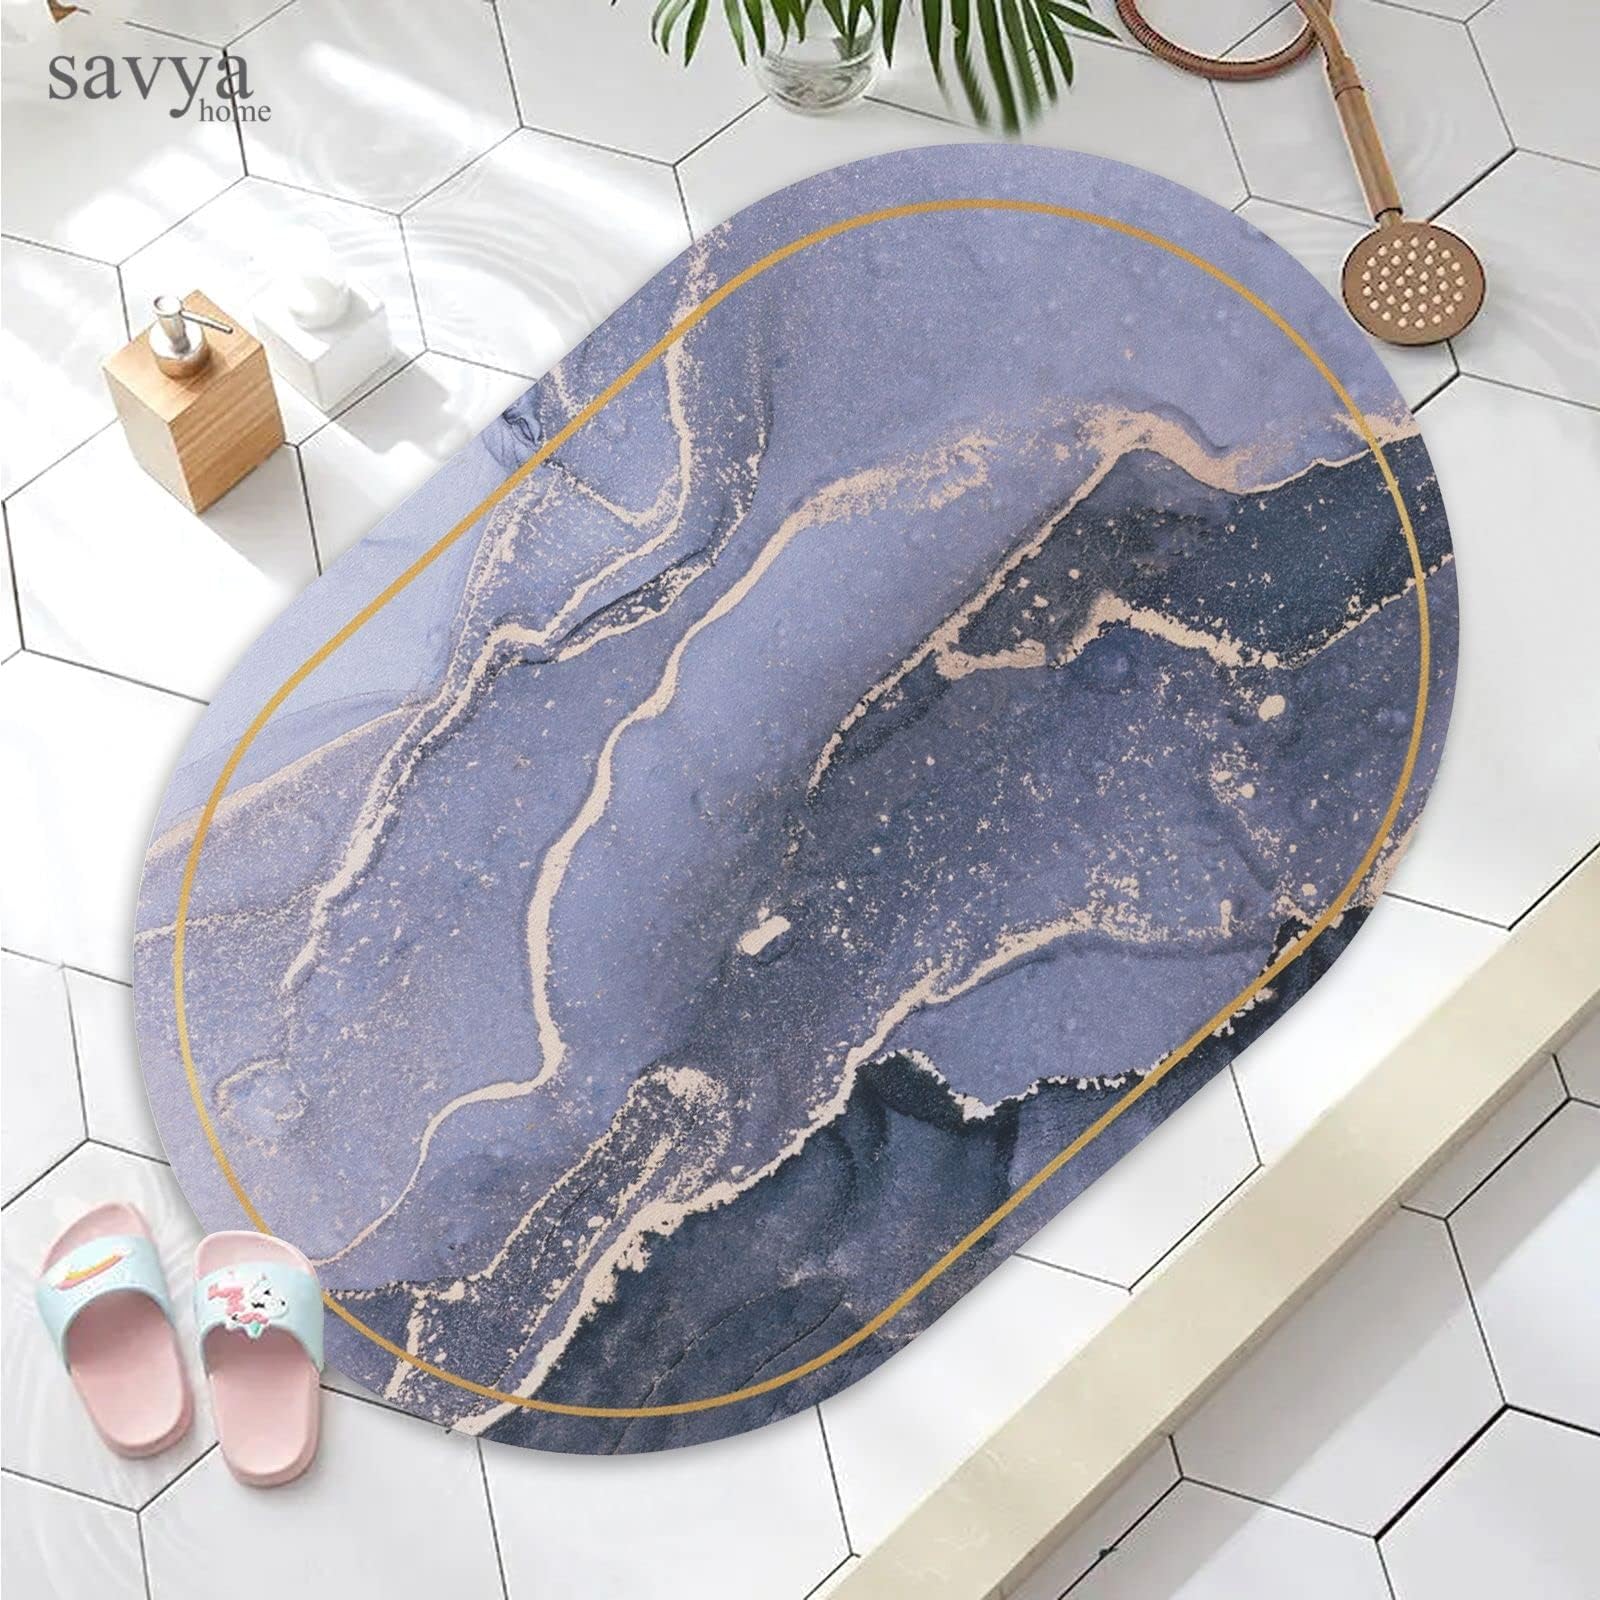 SAVYA HOME Pack of 2 Polypropylene Bathroom Mats|60 x 40cm|Anti-Skid Mat for Living Room, Kitchen, Shower, Bathtub |Multipurpose Mat(Metallic)